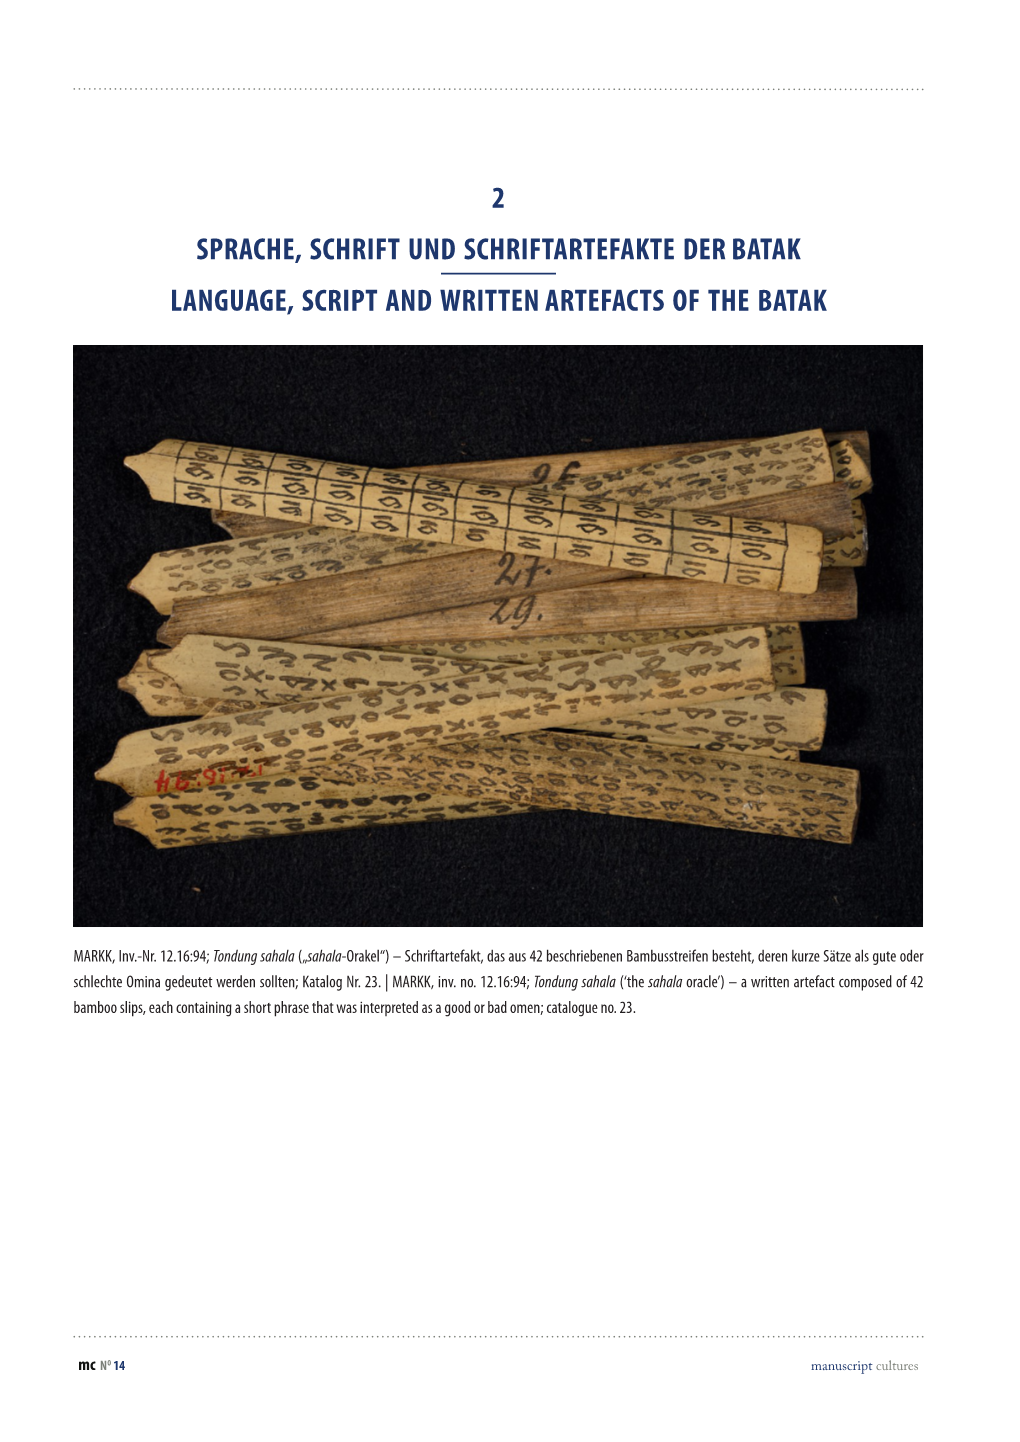 Language, Script and Written Artefacts of the Batak